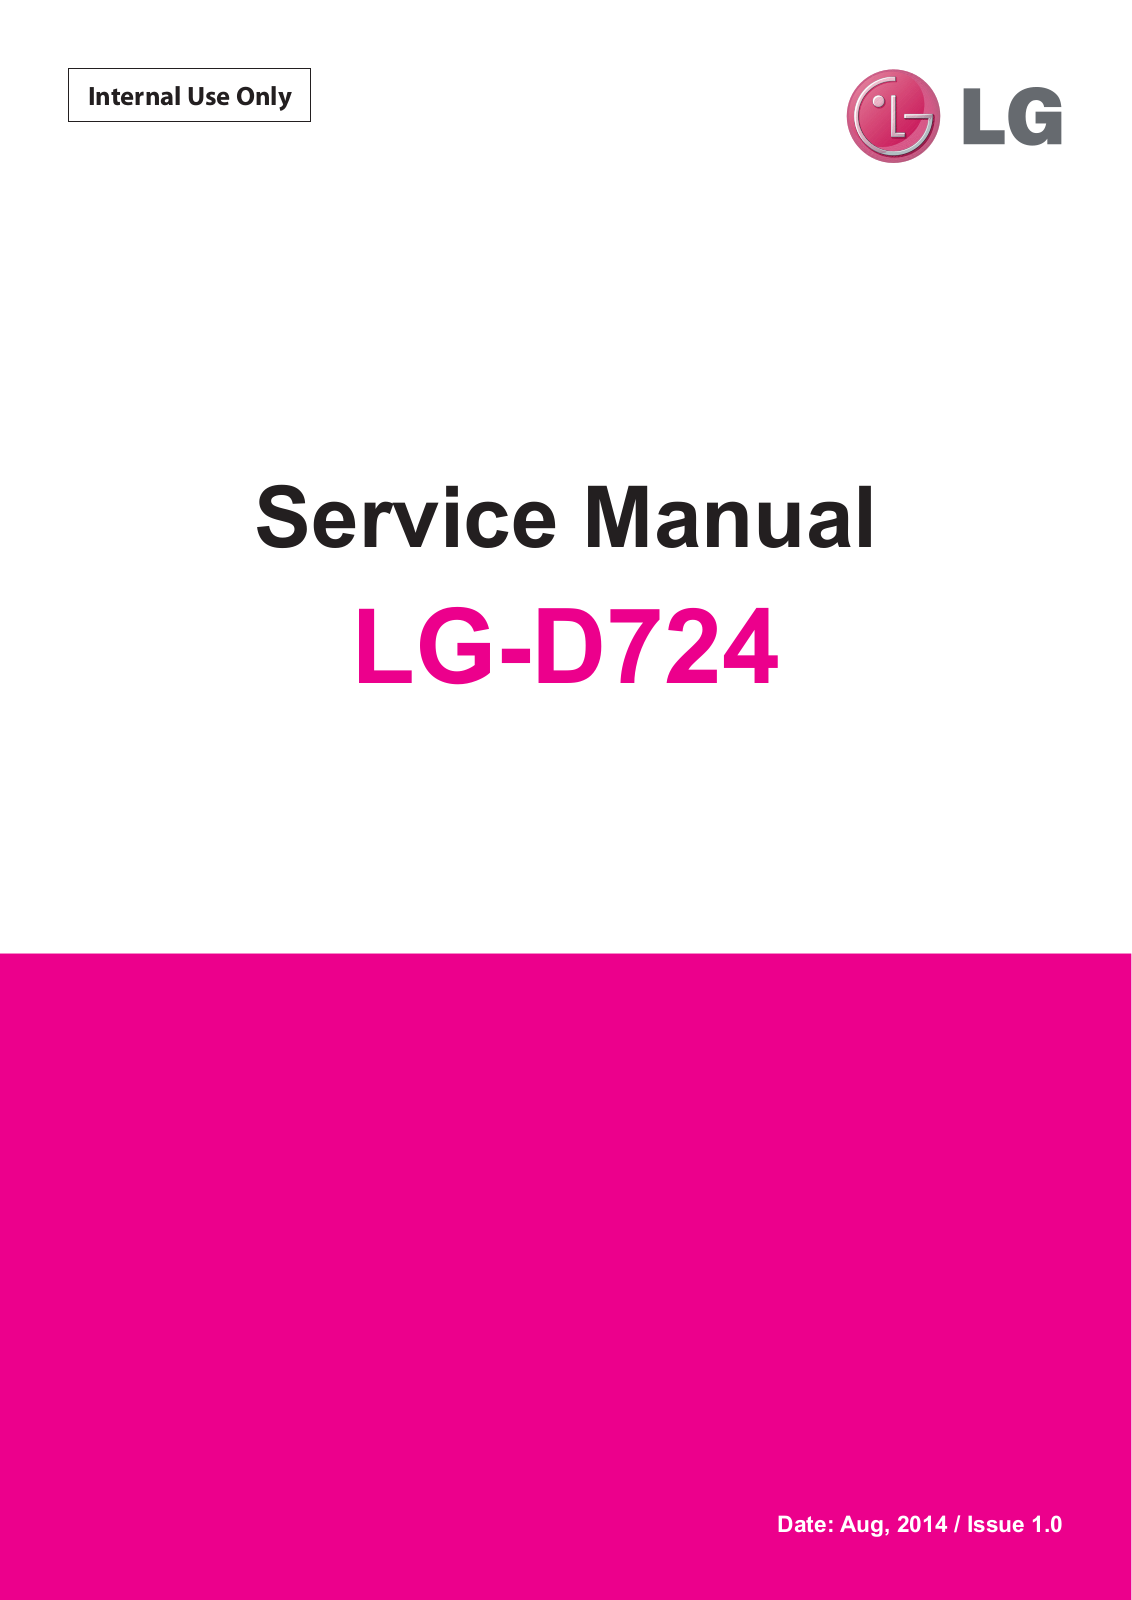 LG G3S D724 Service manual